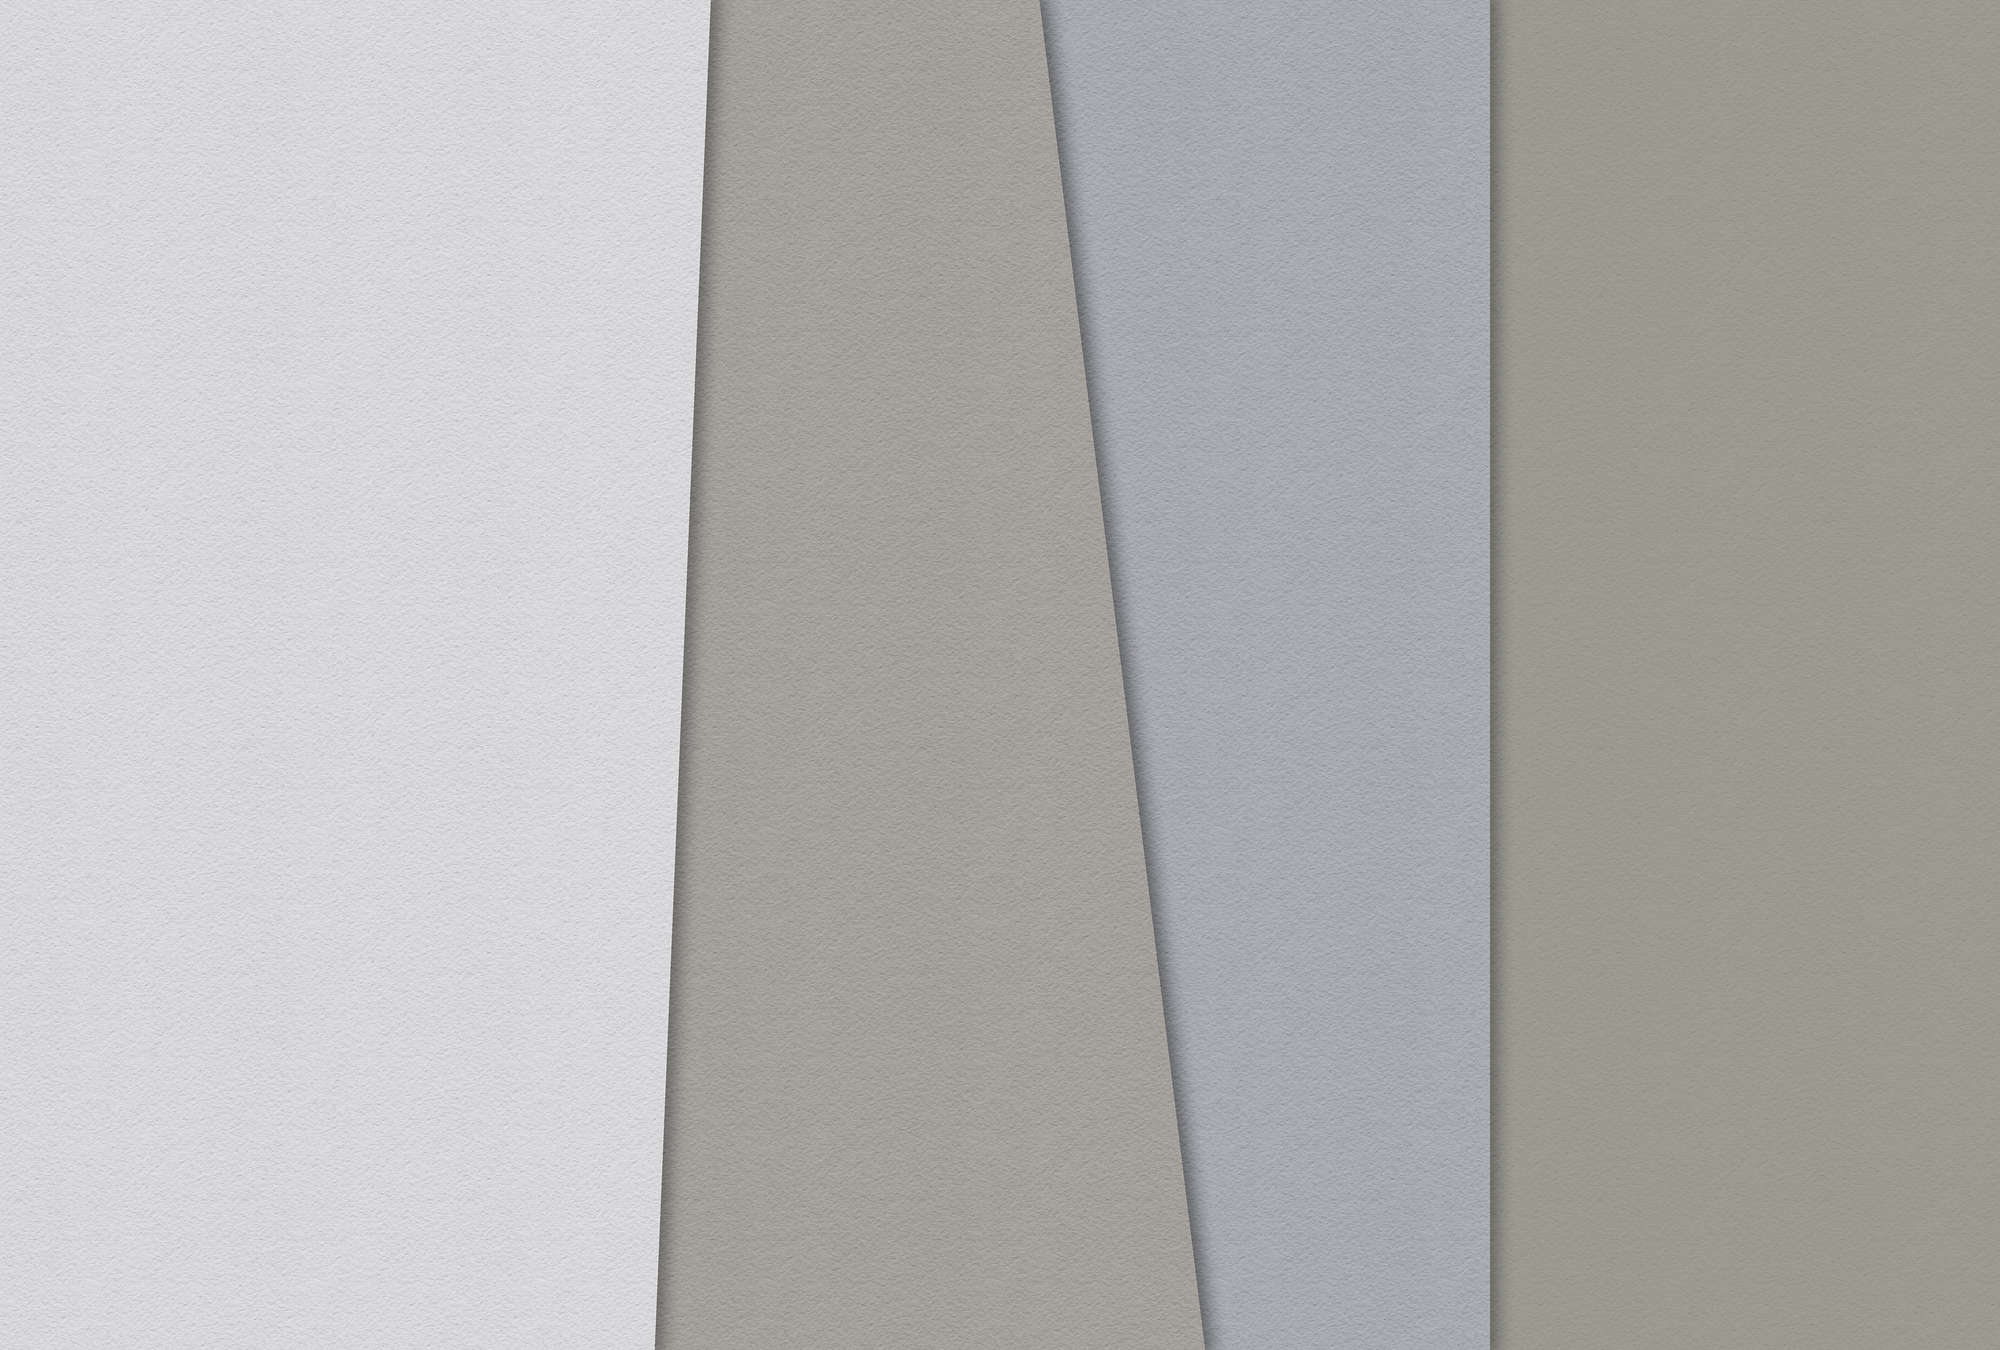             Layered paper 4 - Colourful minimalism mural in handmade paper texture - Blue, Cream | Matt smooth fleece
        